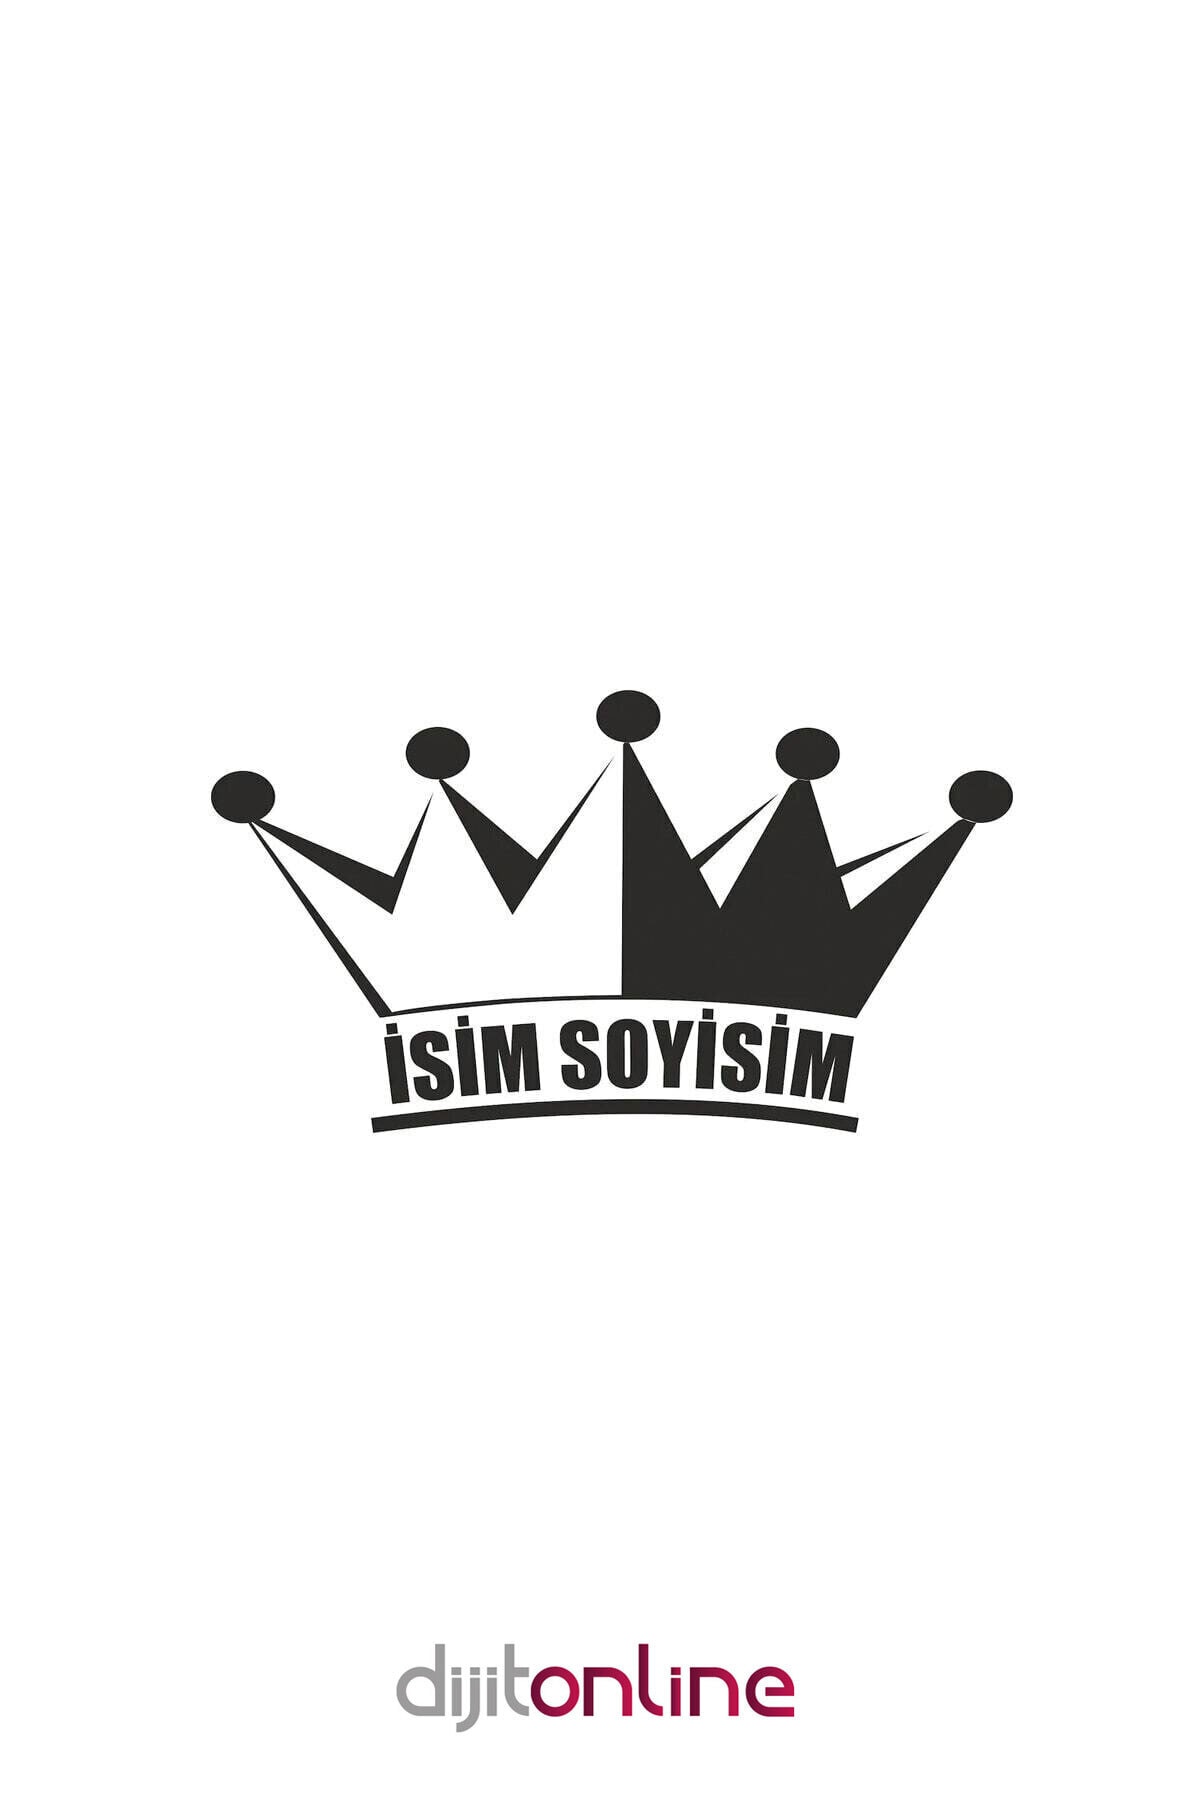 Dijitonline Kral Tacı Isim Soyisim Sticker - Oto Sticker - Araba Sticker